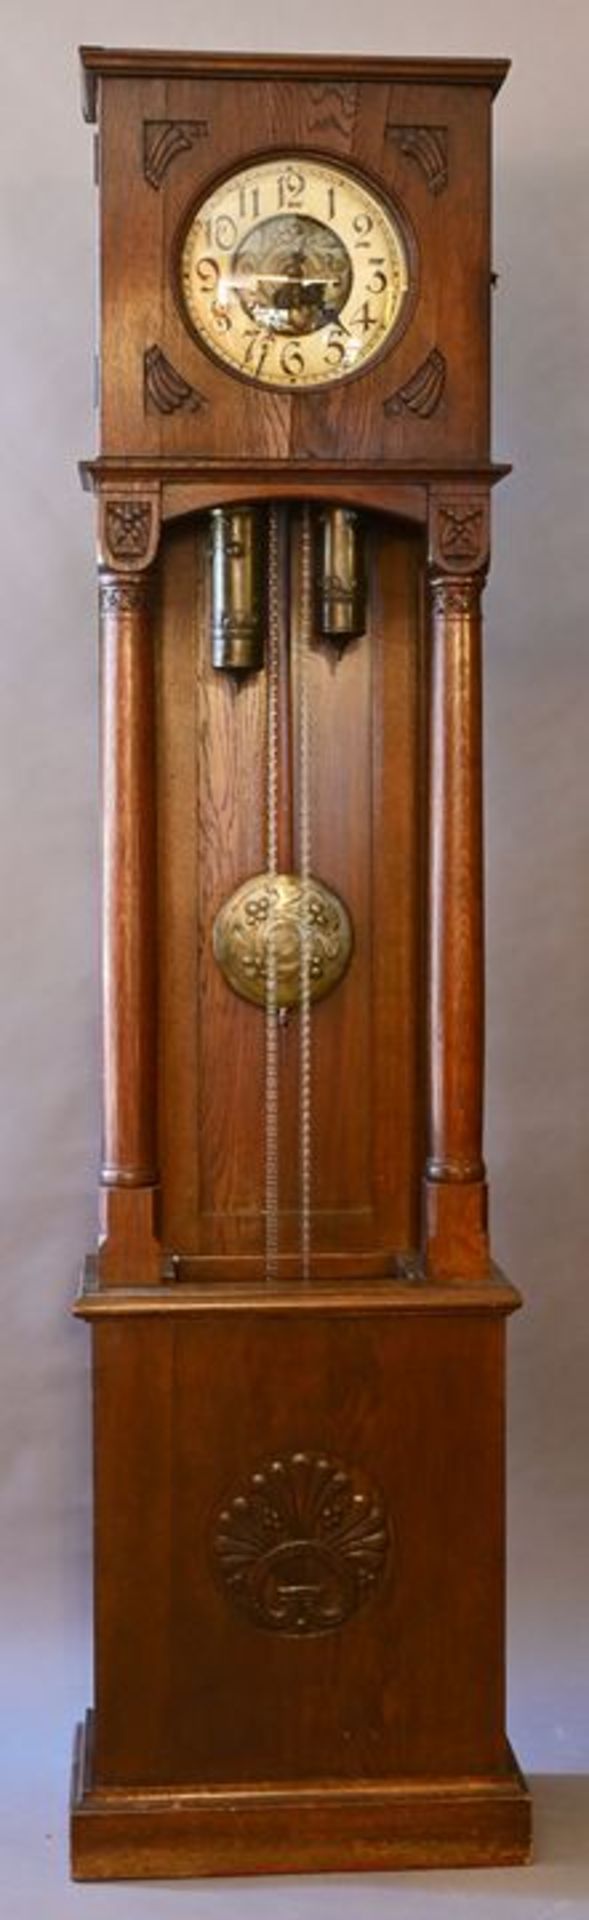 Standuhr / Grandfather's clock